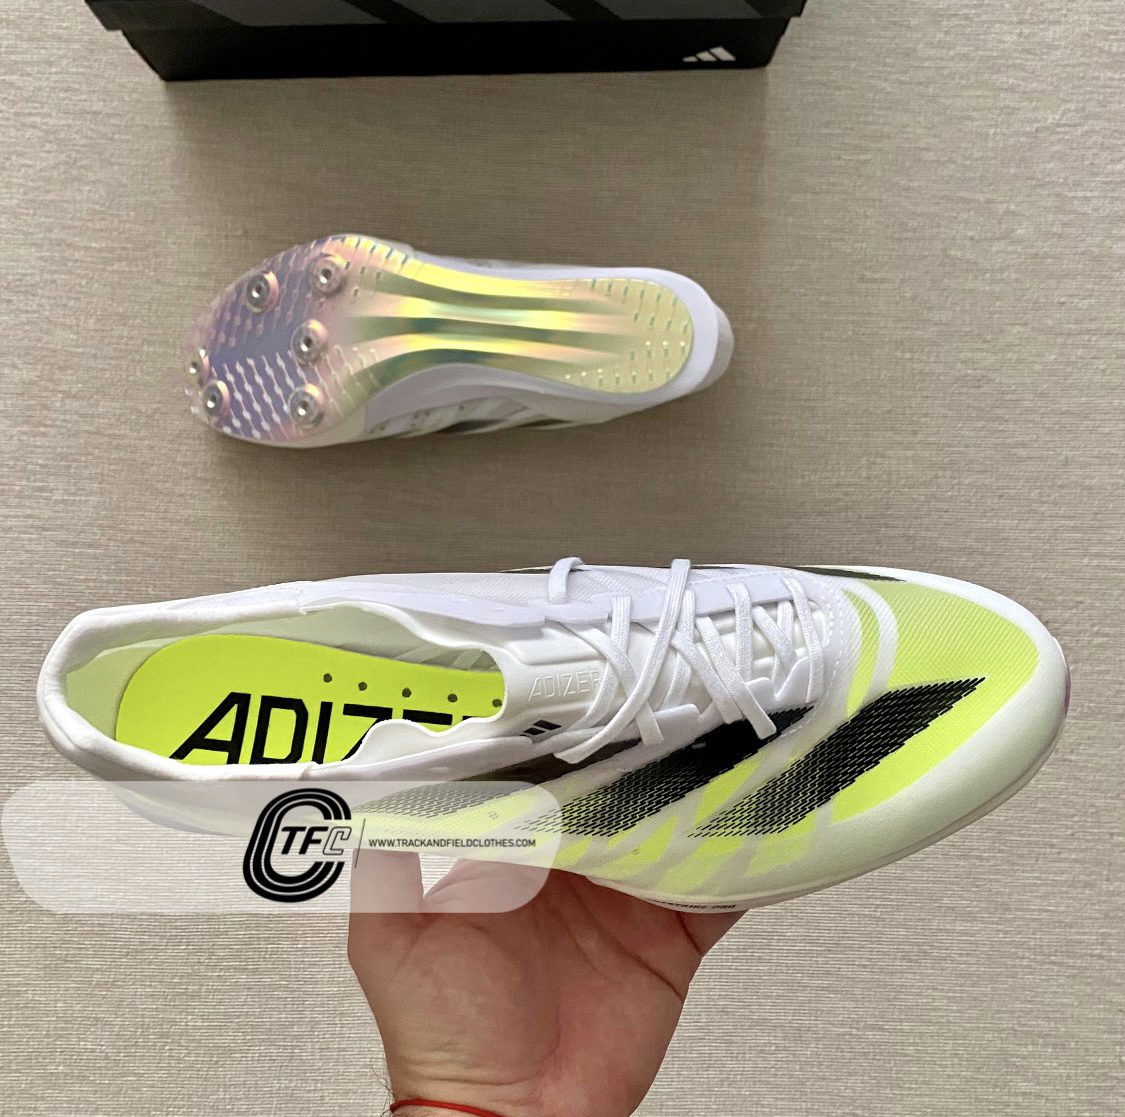 Adidas Adizero Prime SP2 | Trackandfieldclothes